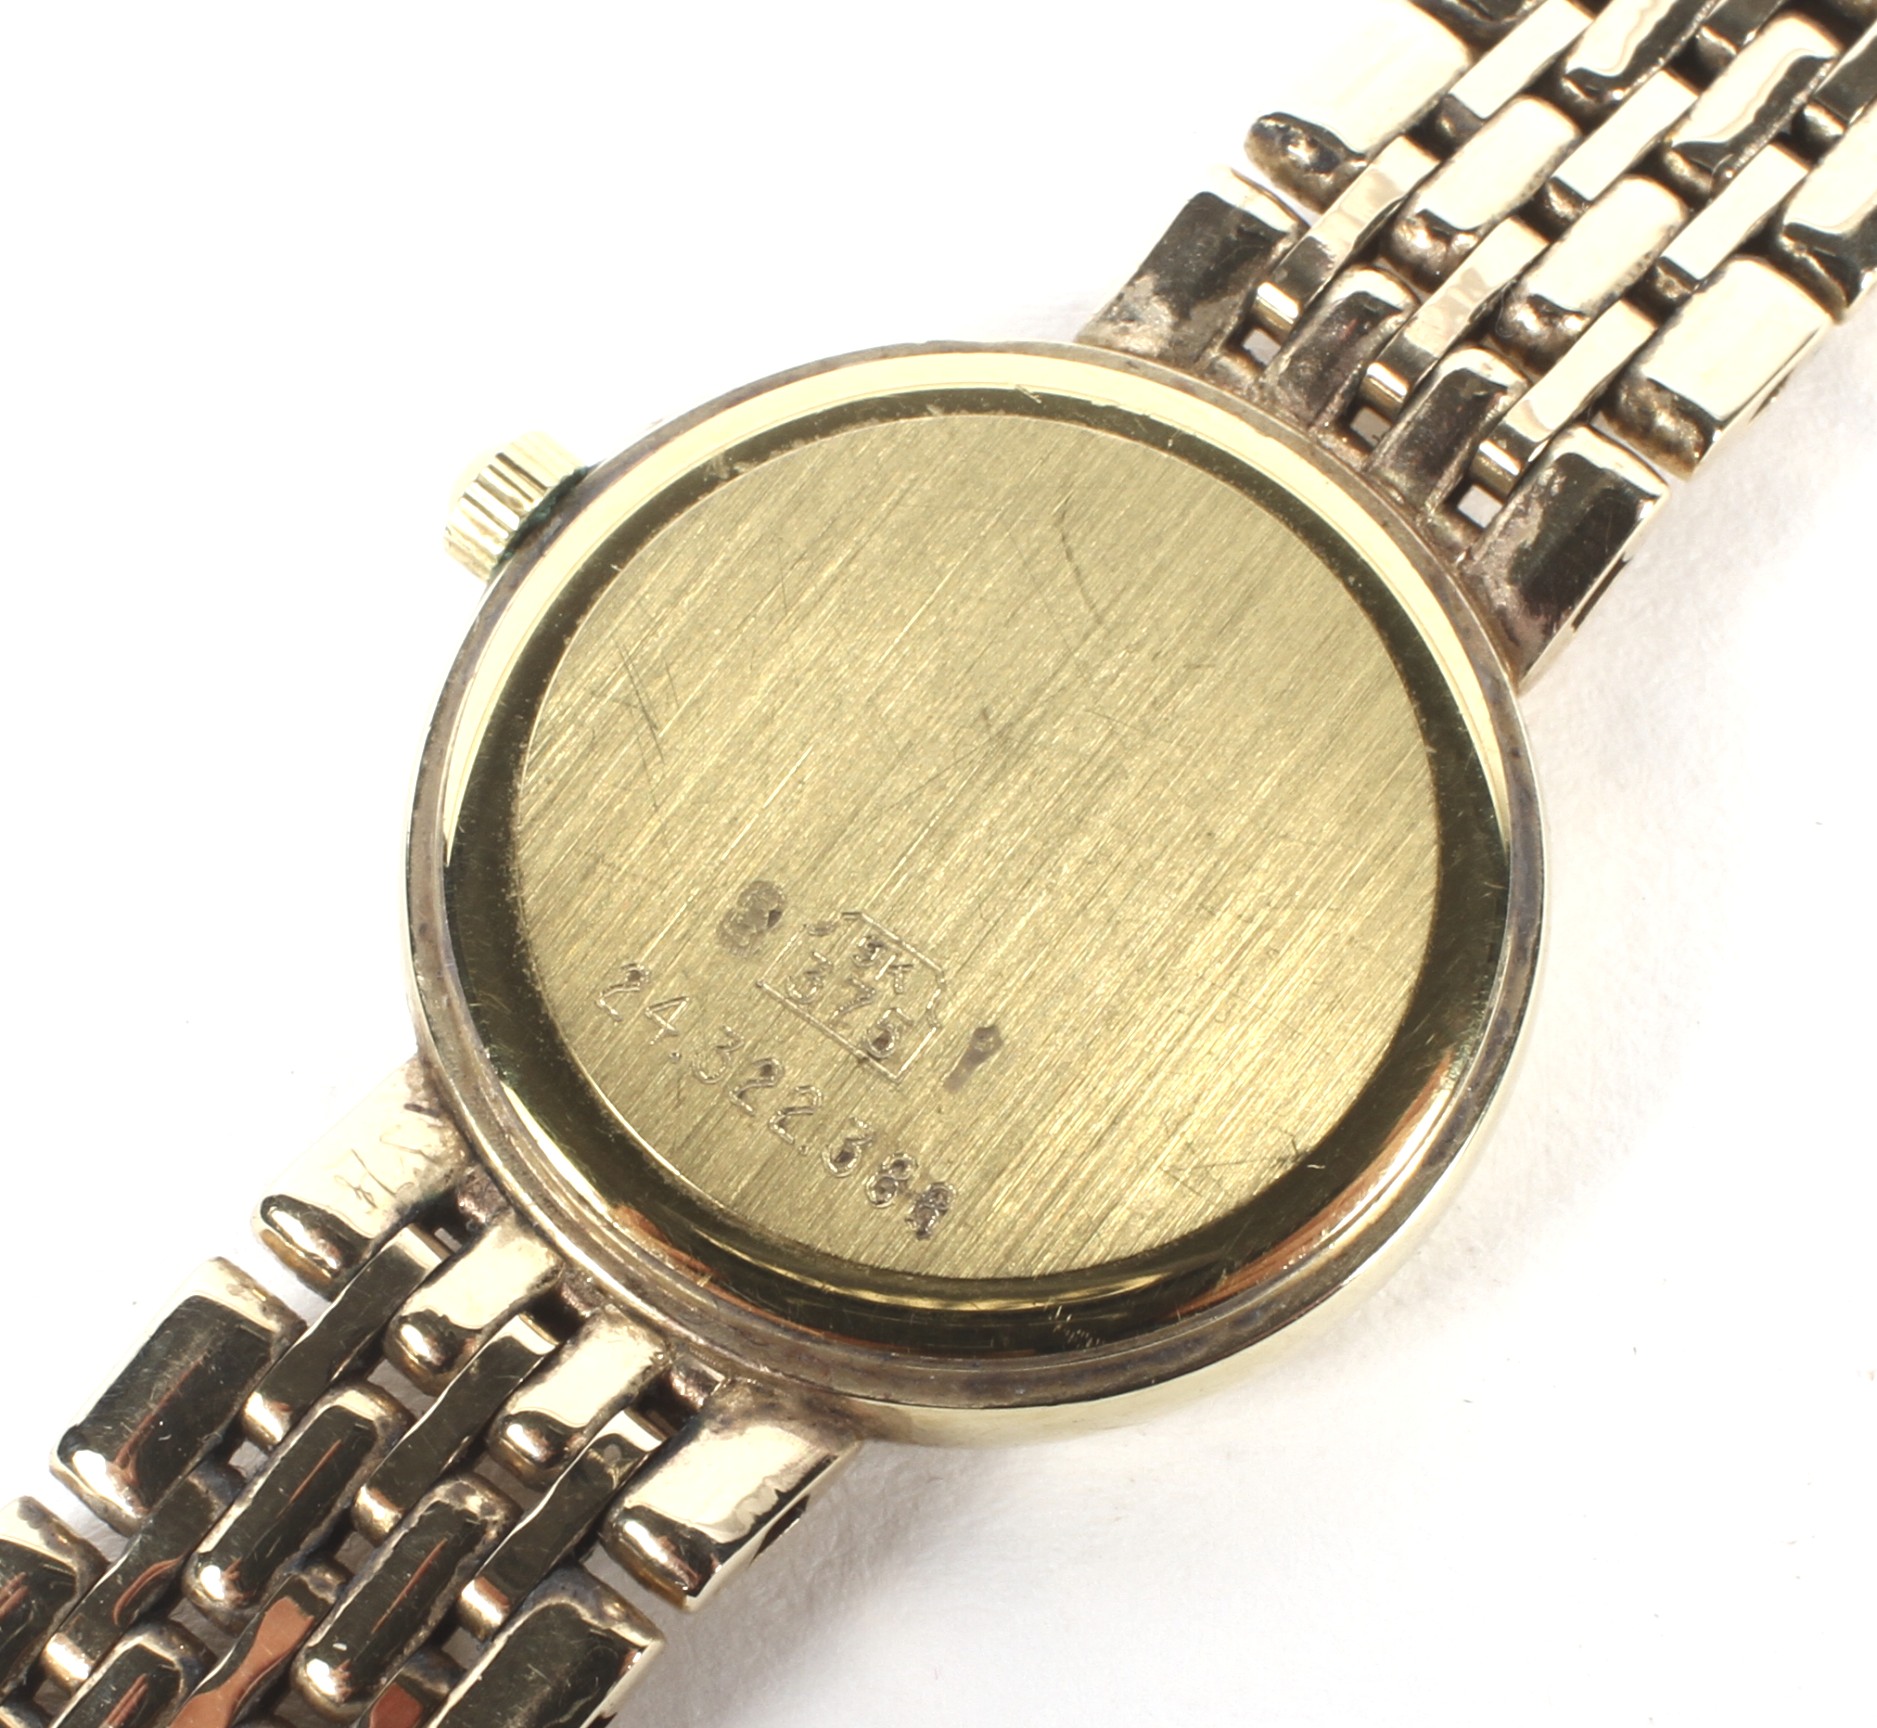 A Ladies 9ct gold Longines wristwatch with original gate bracelet hallmarked 375 with original box - Image 3 of 4